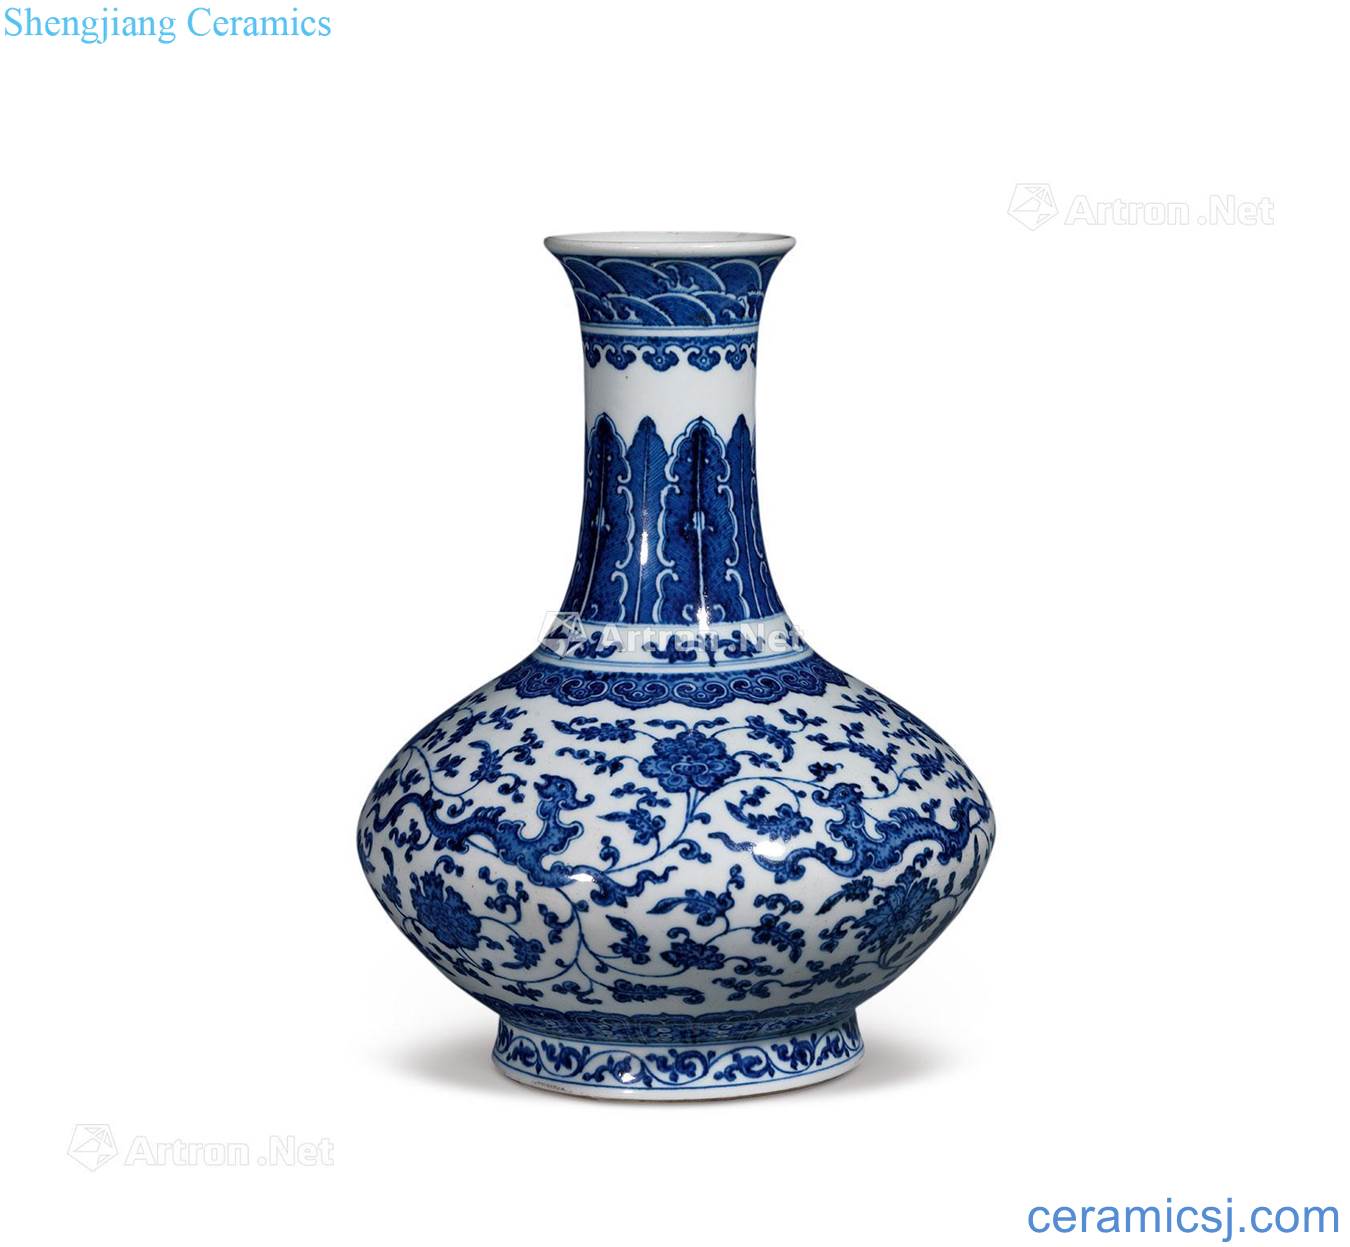 Emperor qianlong Blue and white dragon design